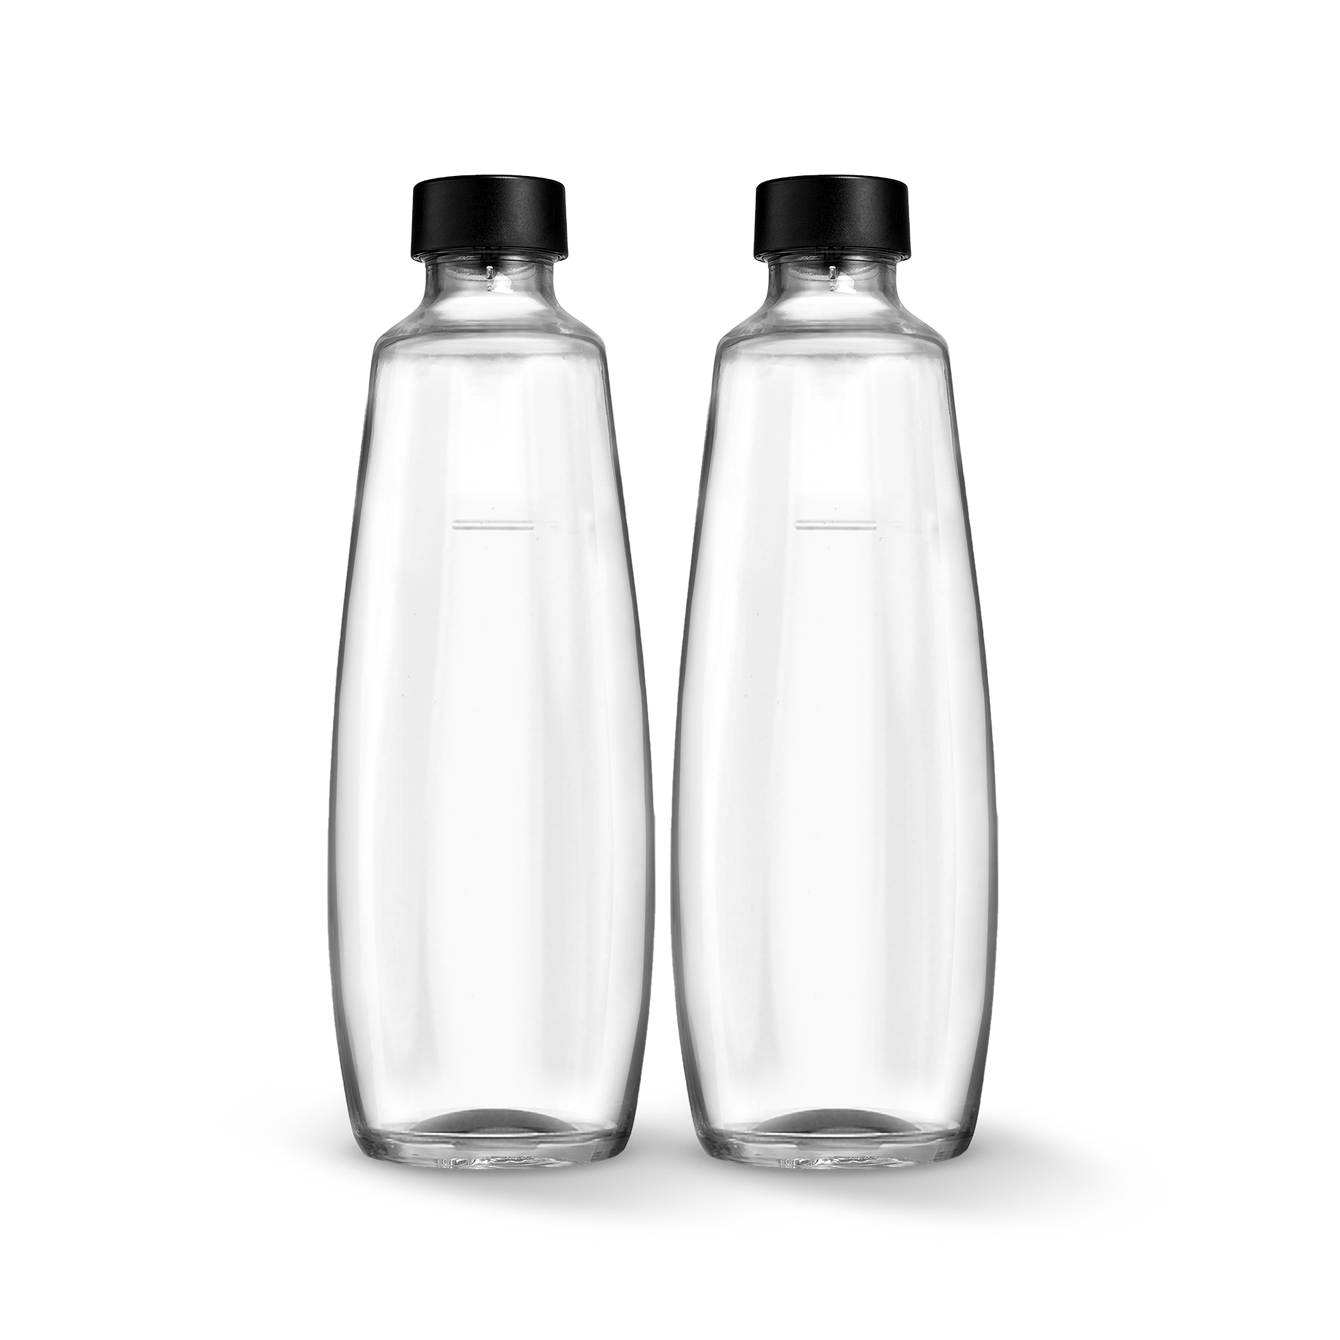 Sommerpromotion- DUO Glasflasche, 1 L*,  2er-Pack